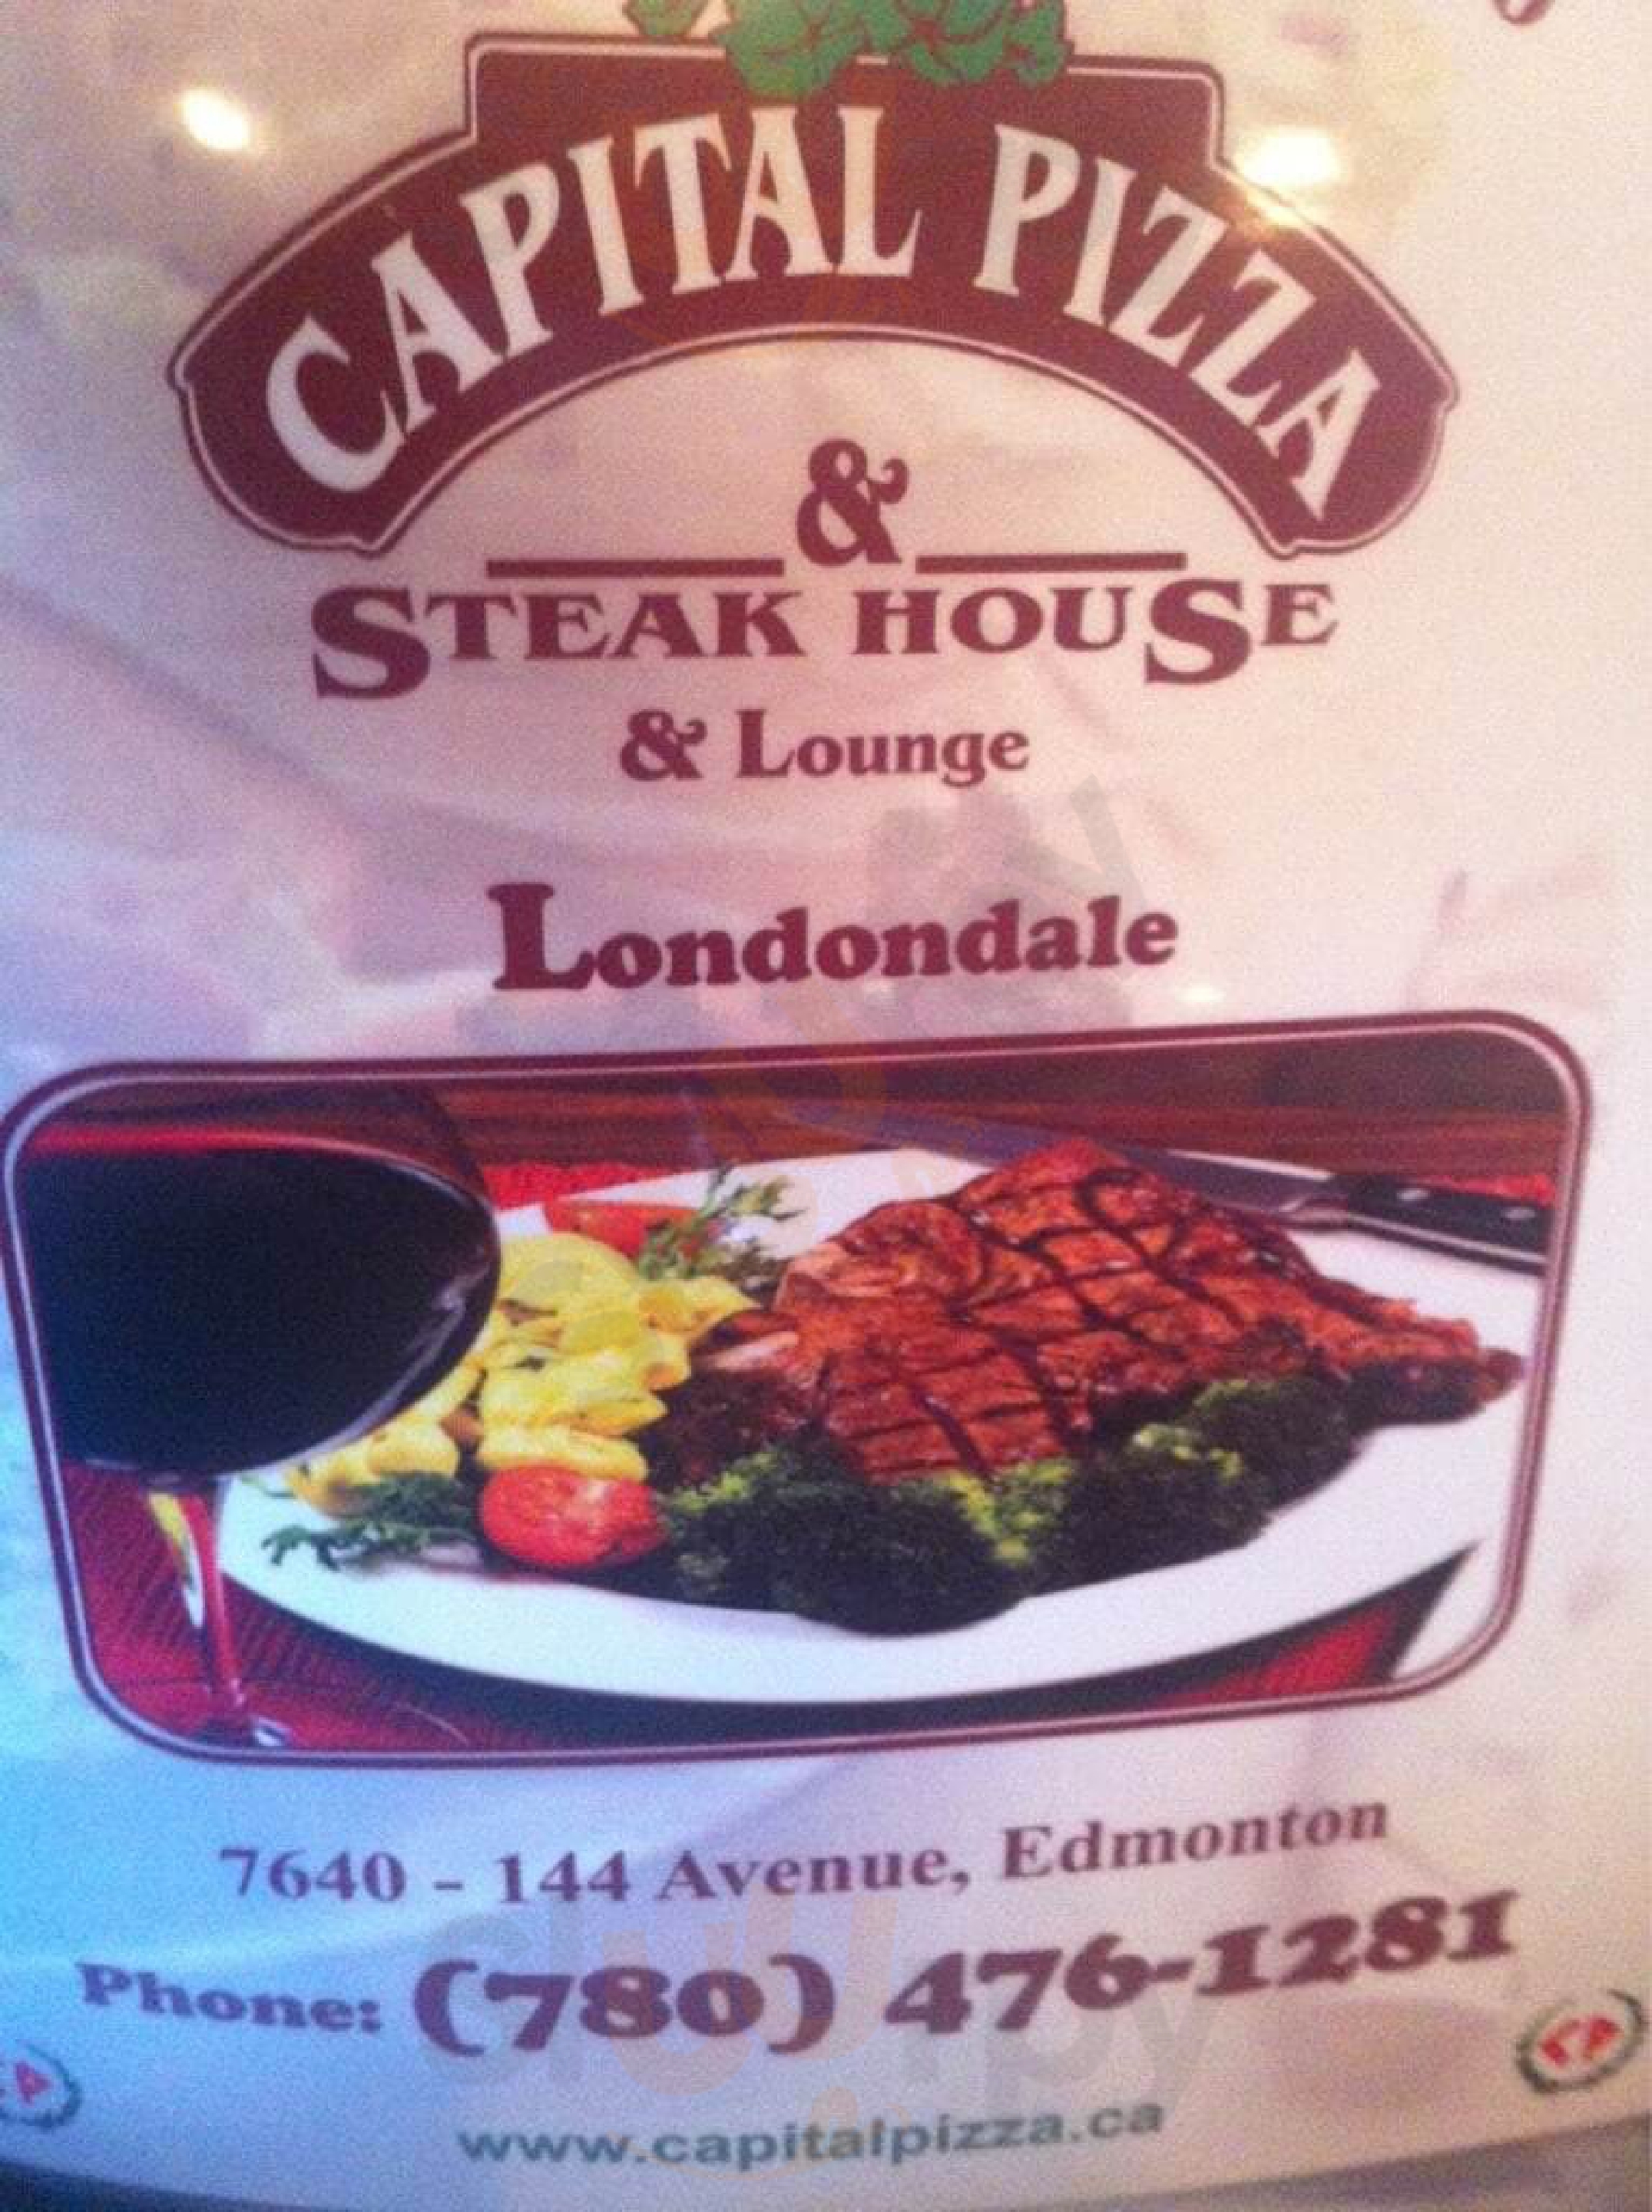 Capital Pizza & Steakhouse Edmonton Menu - 1